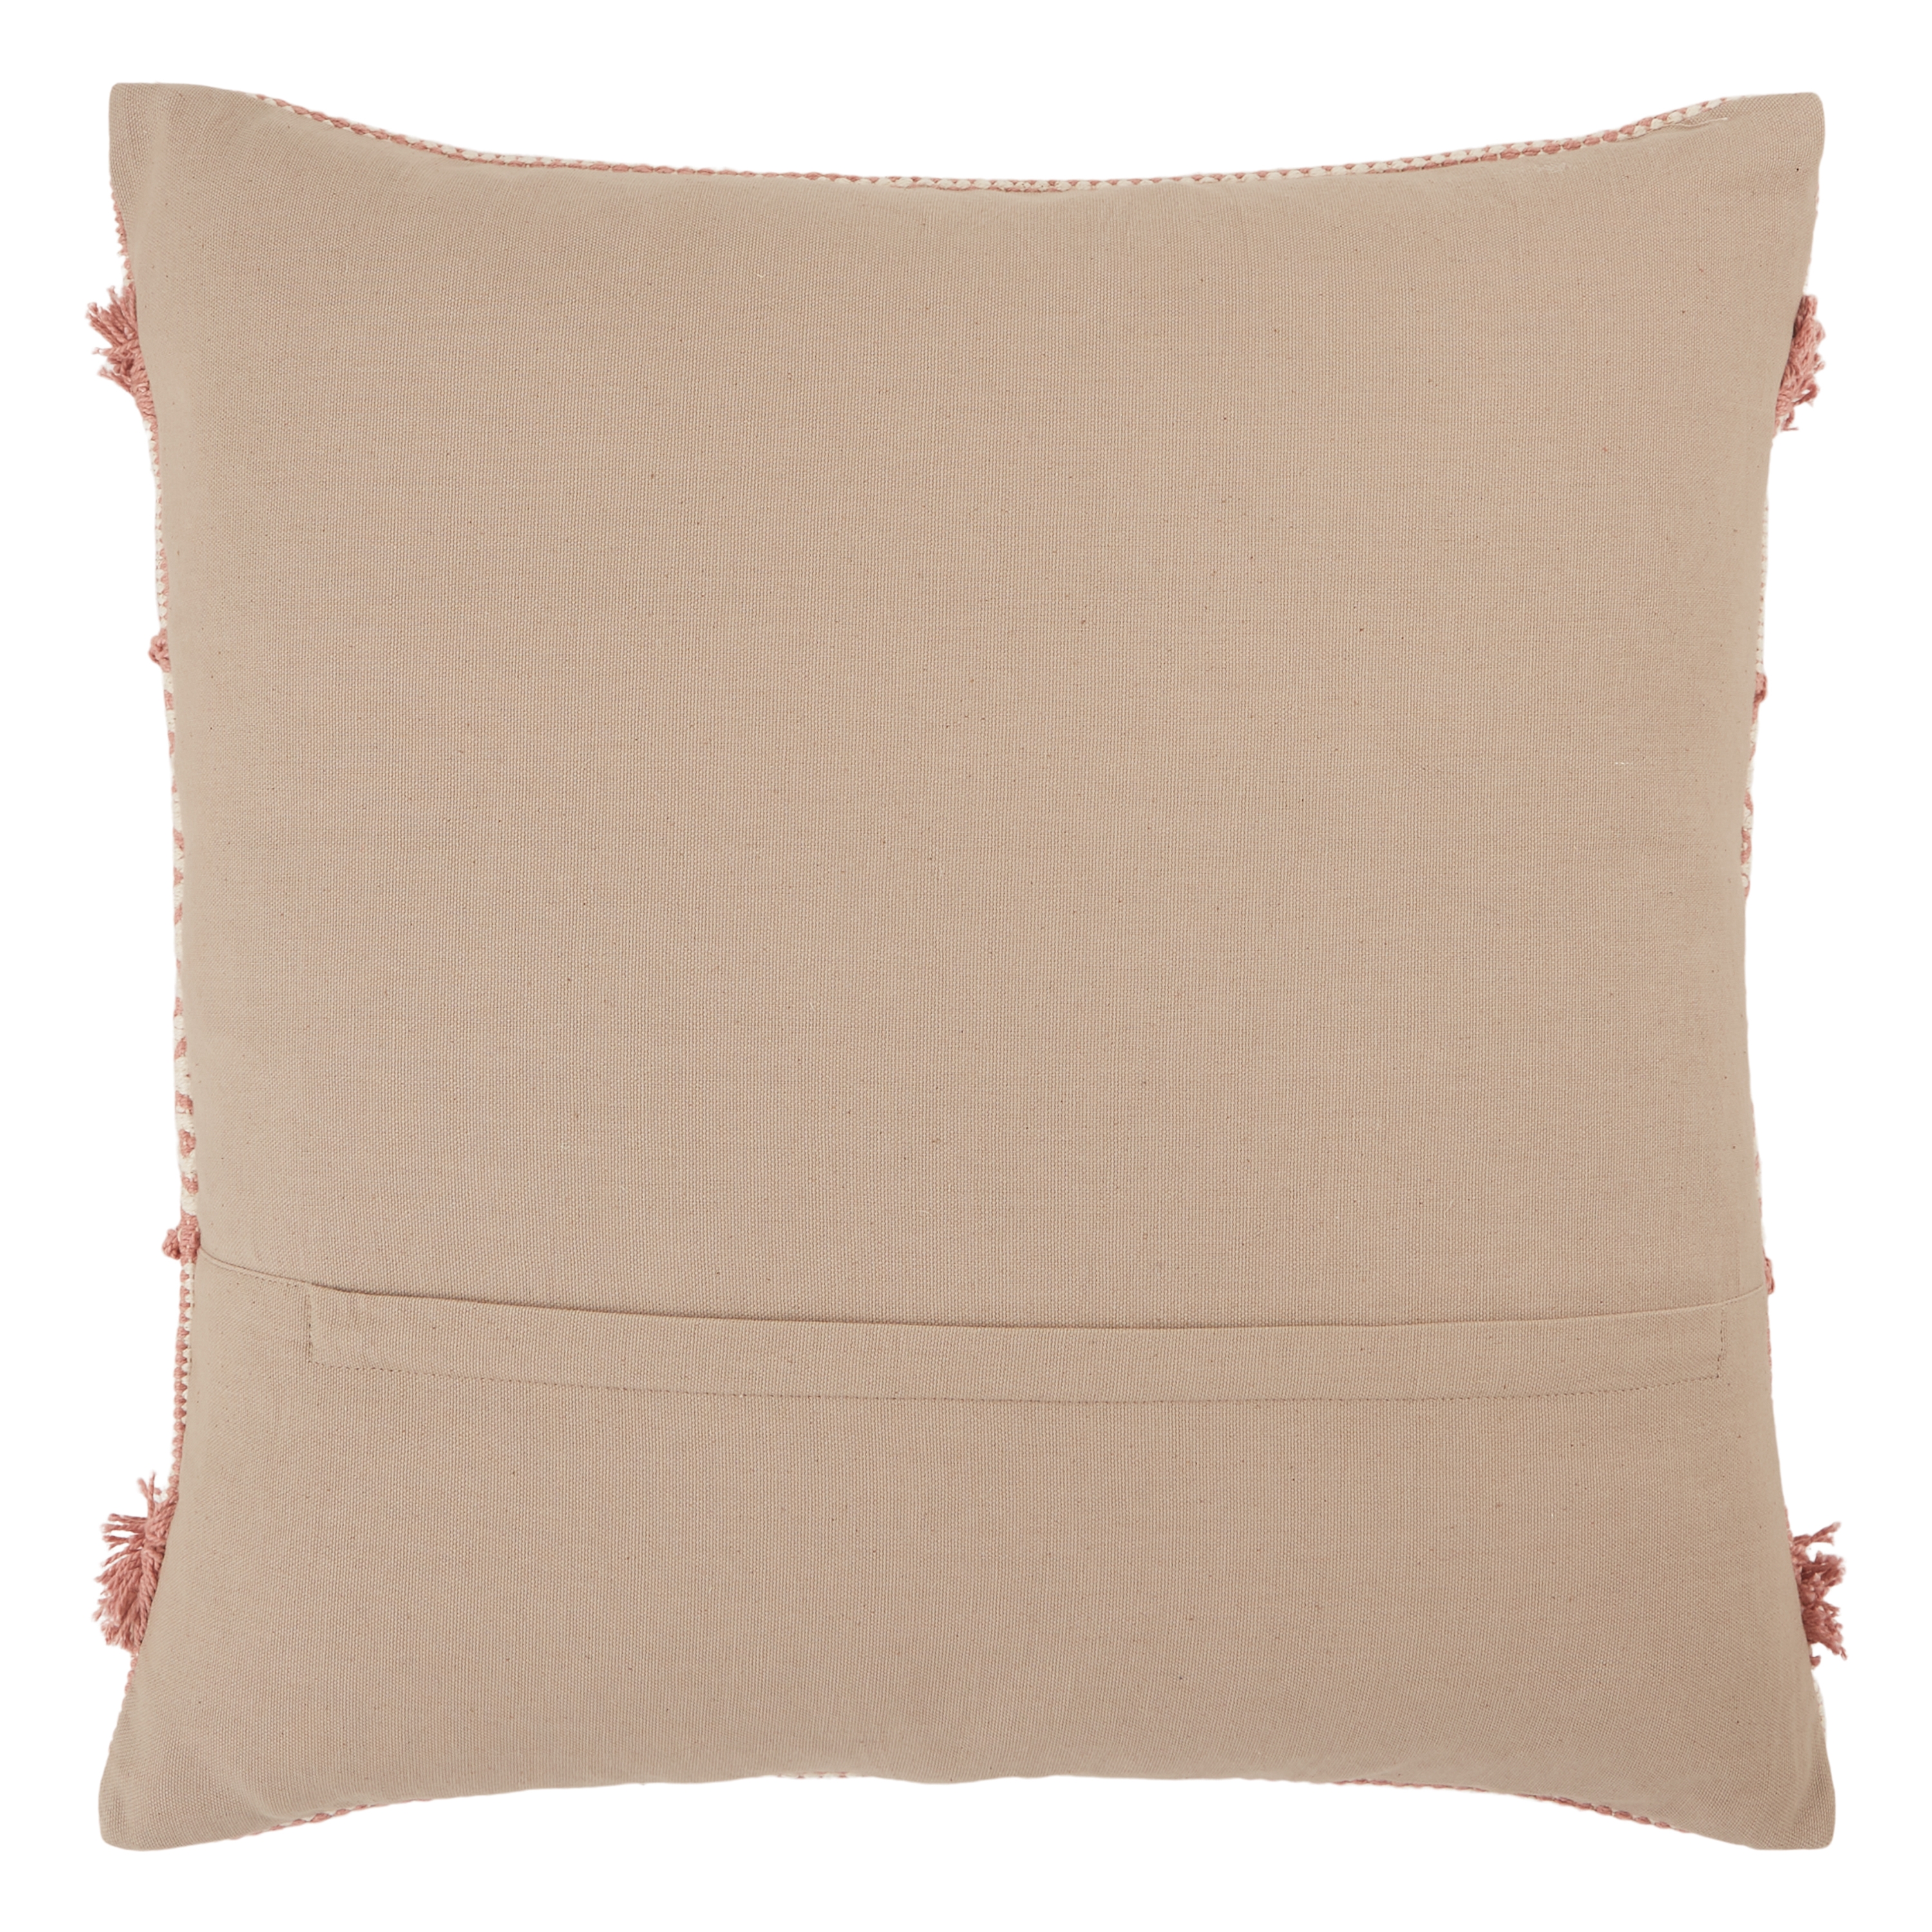 Design (US) Pink 20"X20" Pillow DOWN INSERT - Image 1